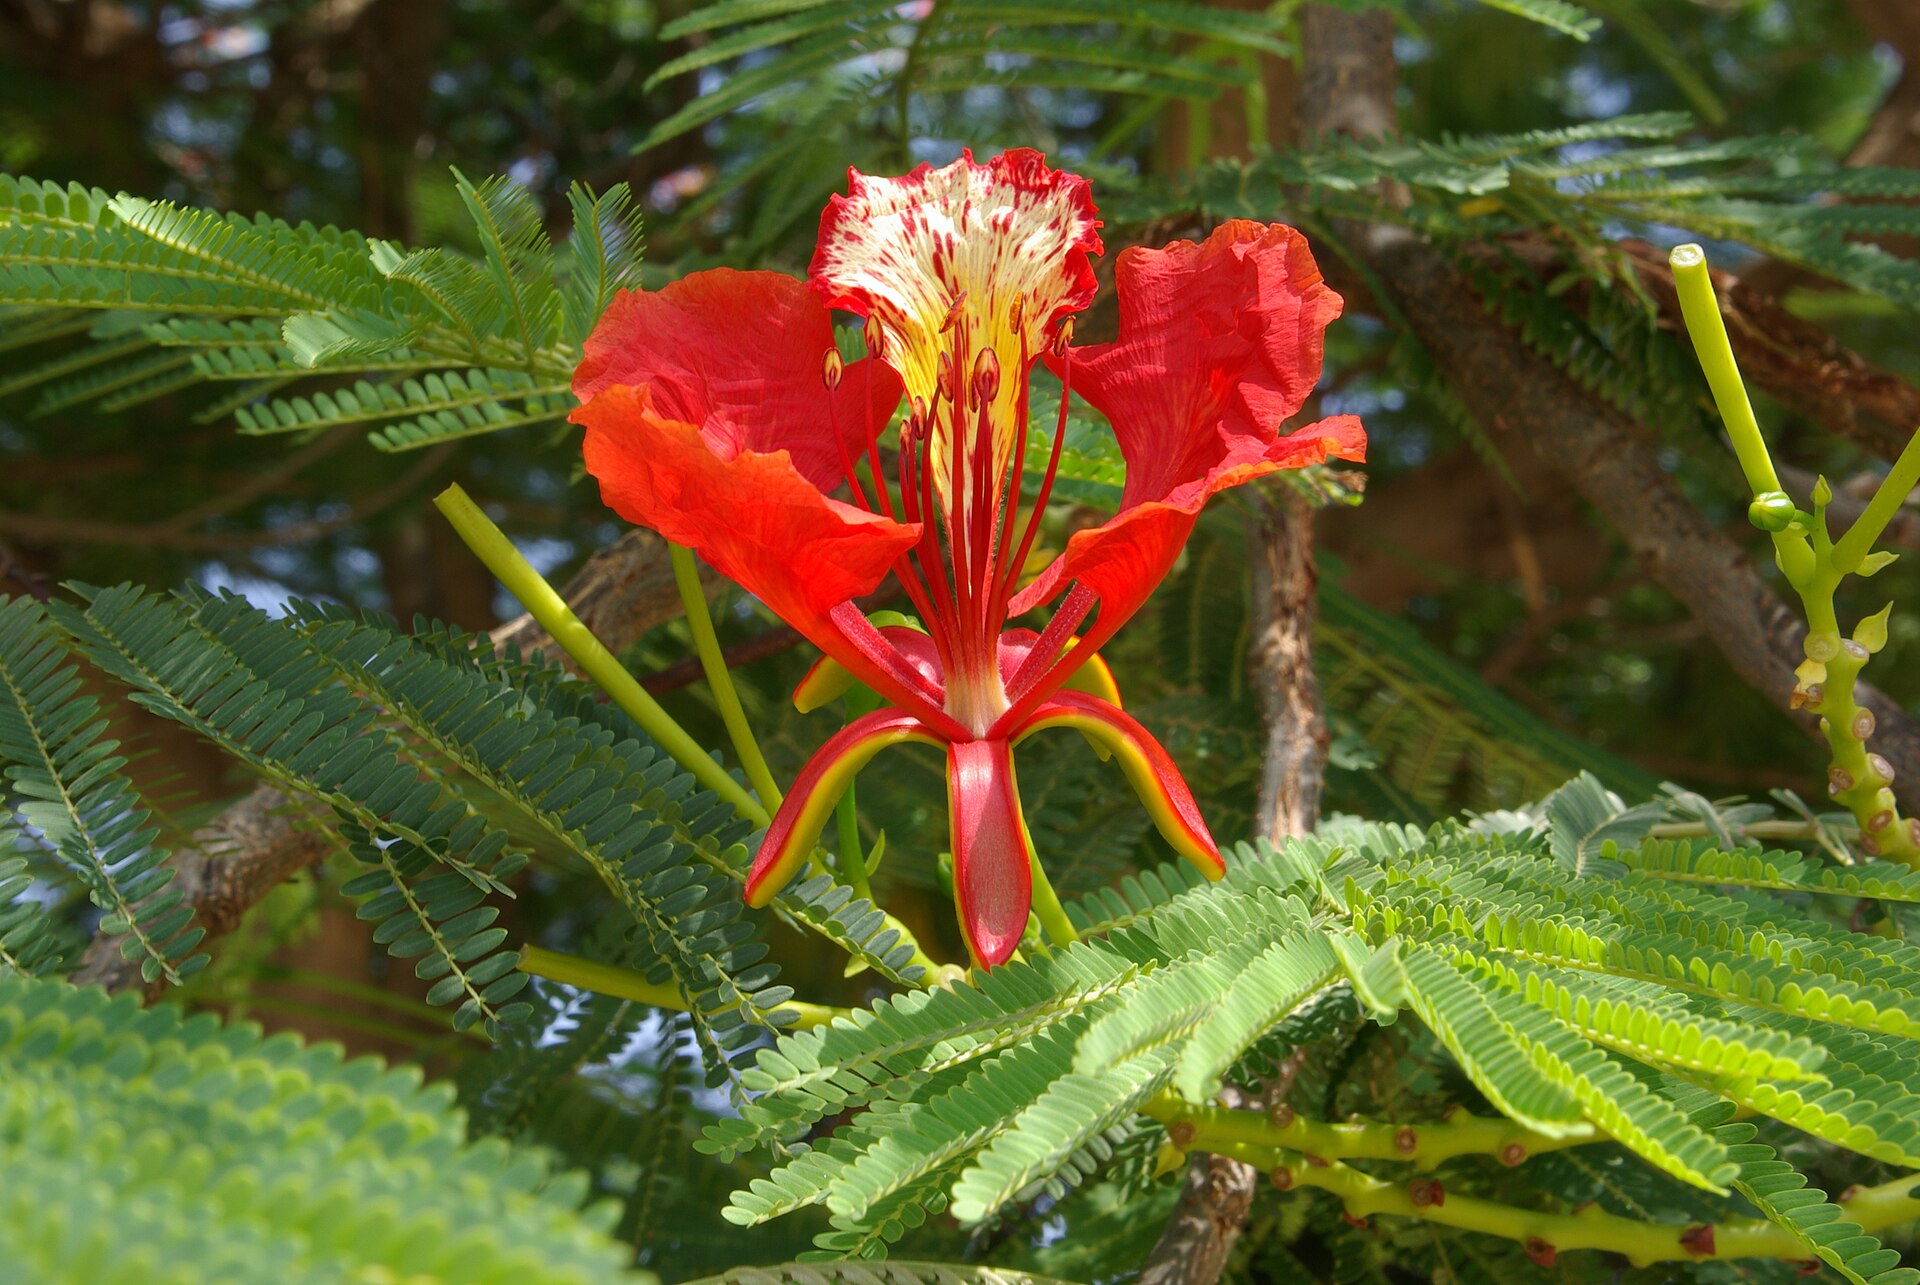 Flame Tree Flower (Kibbutz Ginnosar, Israel)